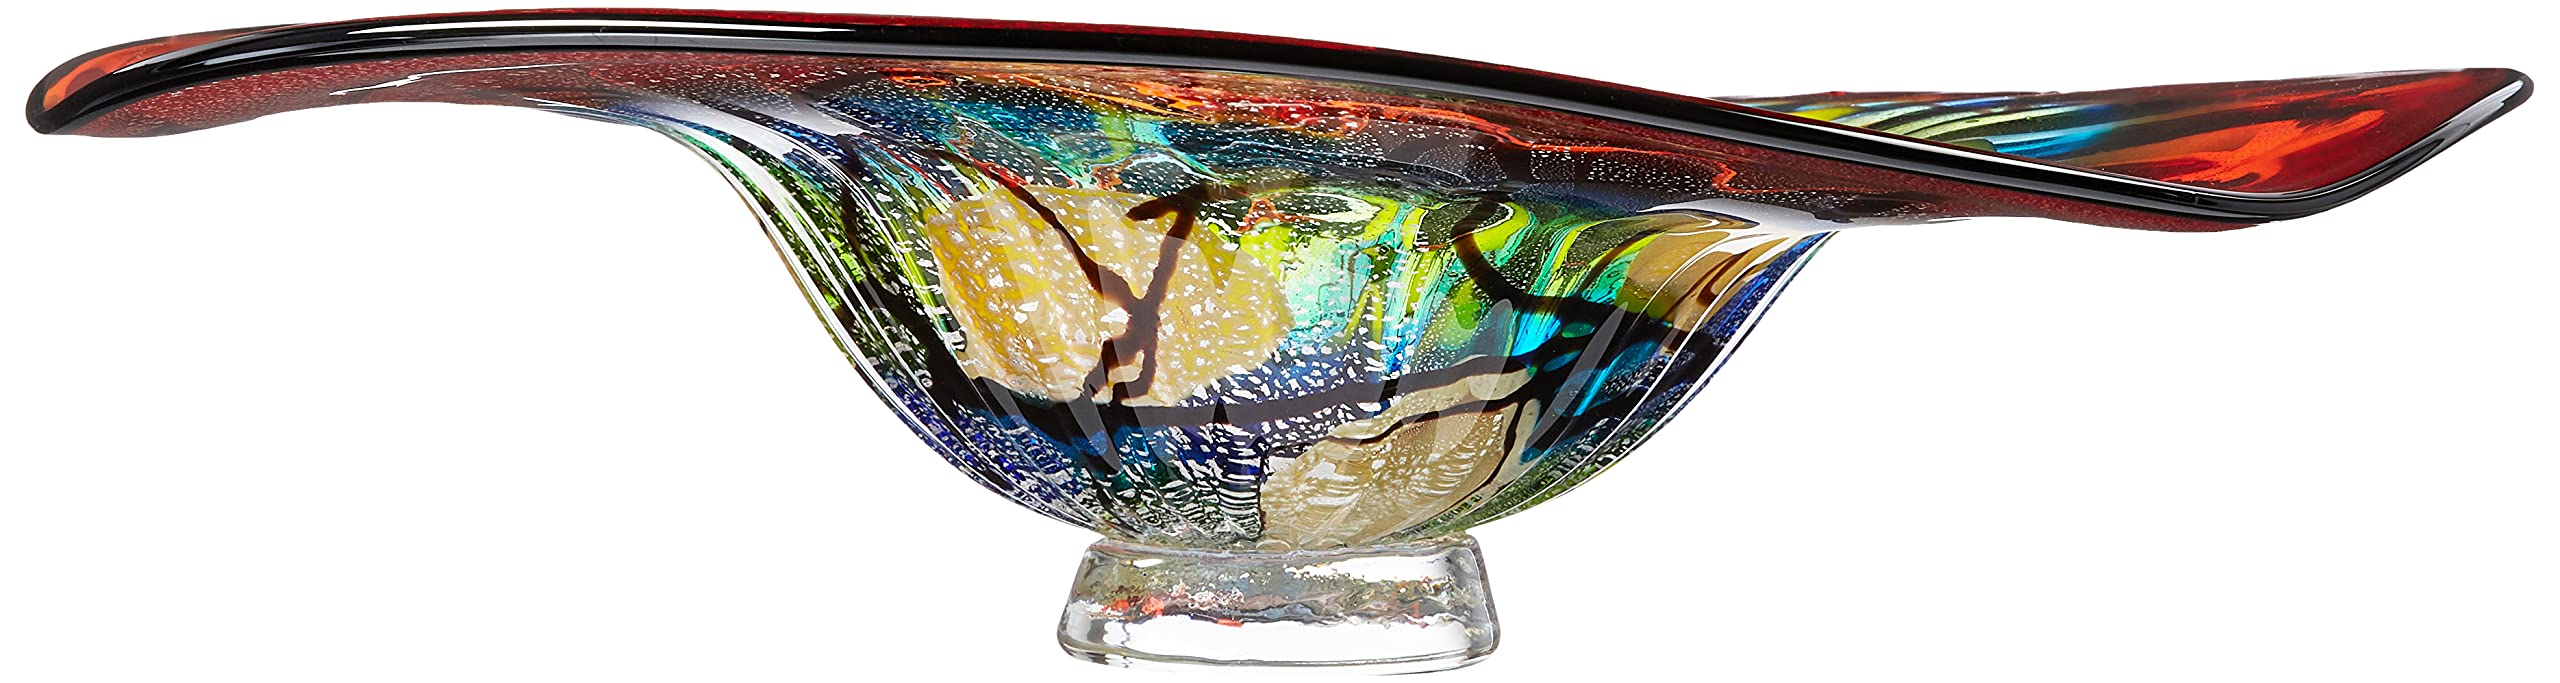 Dale Tiffany Hankley Art Glass Wal Decor Plate,5.00x20.00x20.00